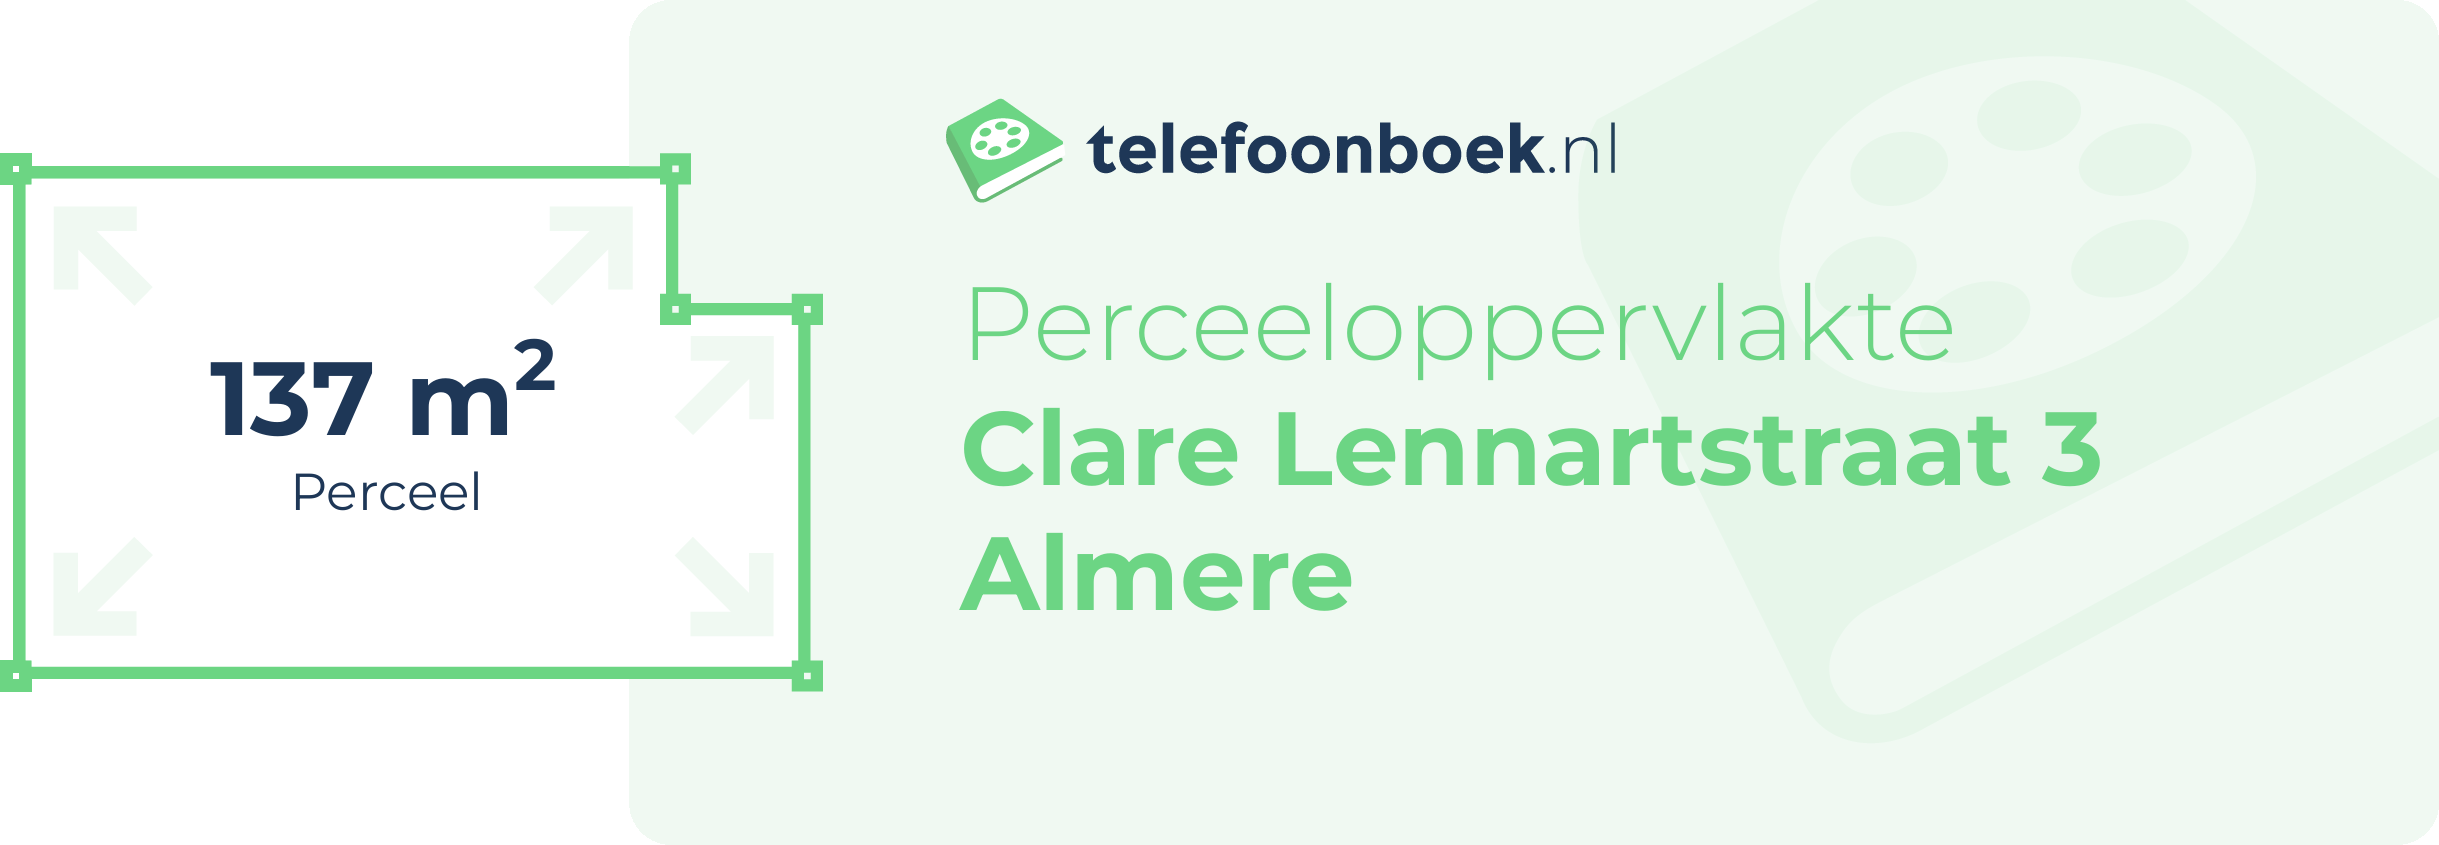 Perceeloppervlakte Clare Lennartstraat 3 Almere